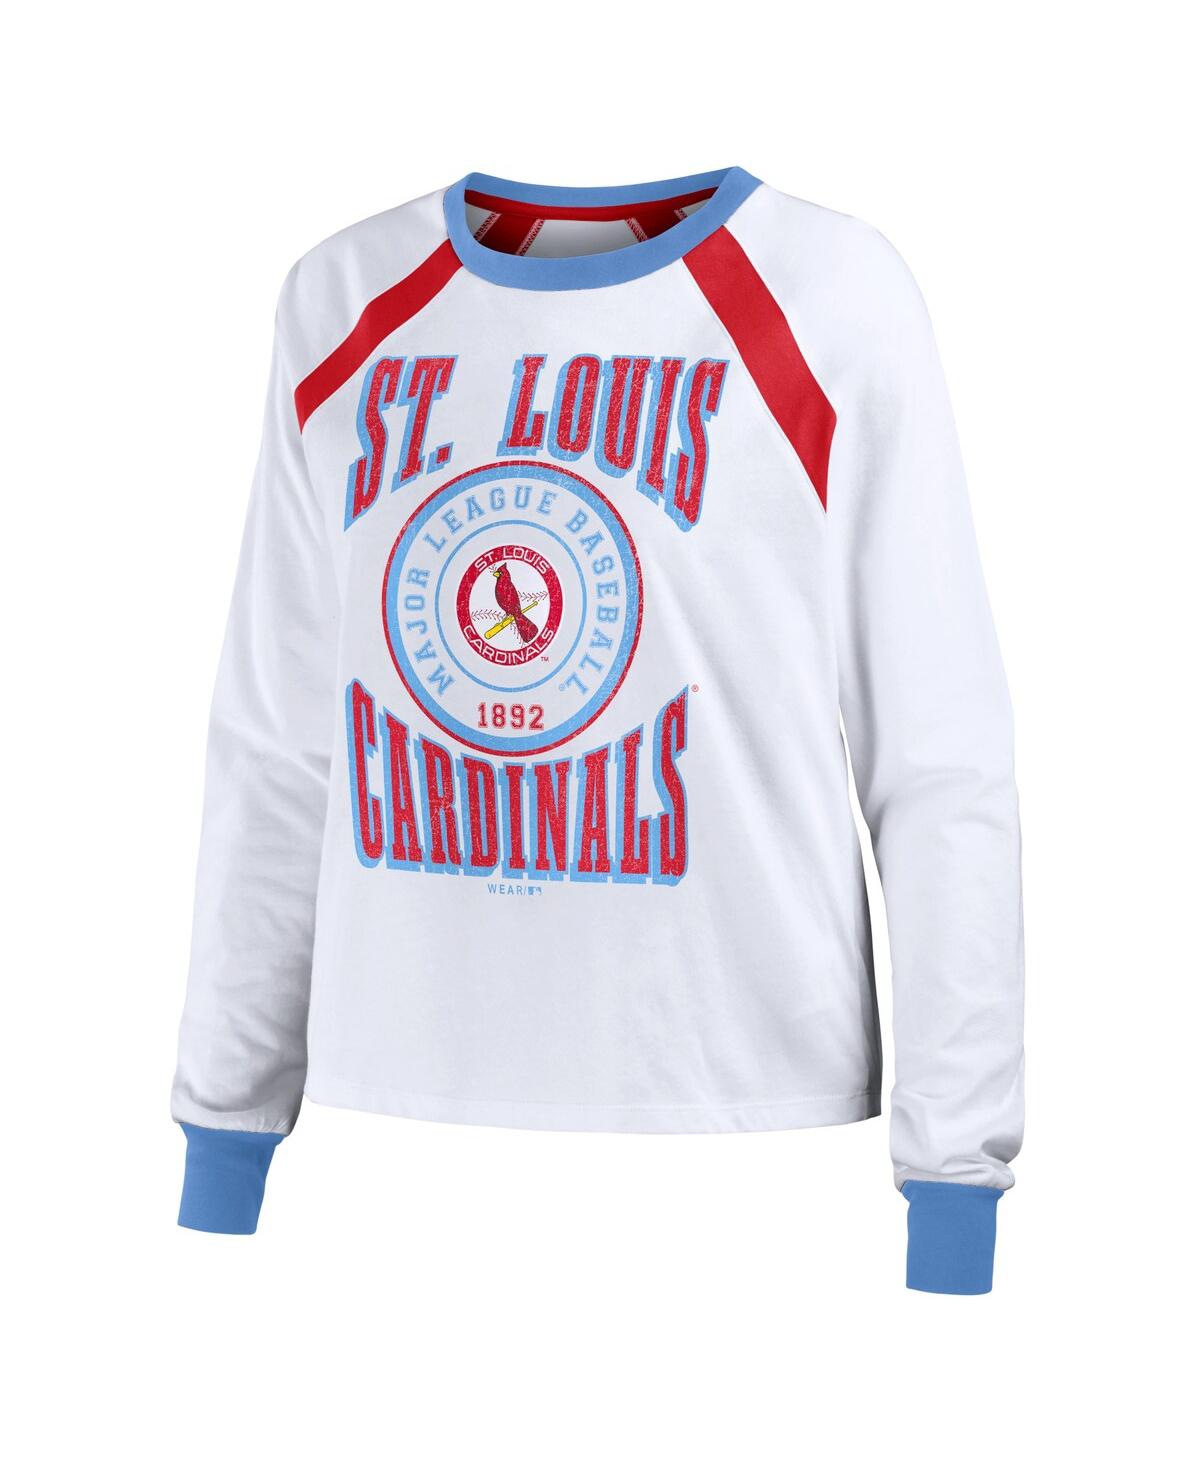 Shop Wear By Erin Andrews Women's  White Distressed St. Louis Cardinals Raglan Long Sleeve T-shirt